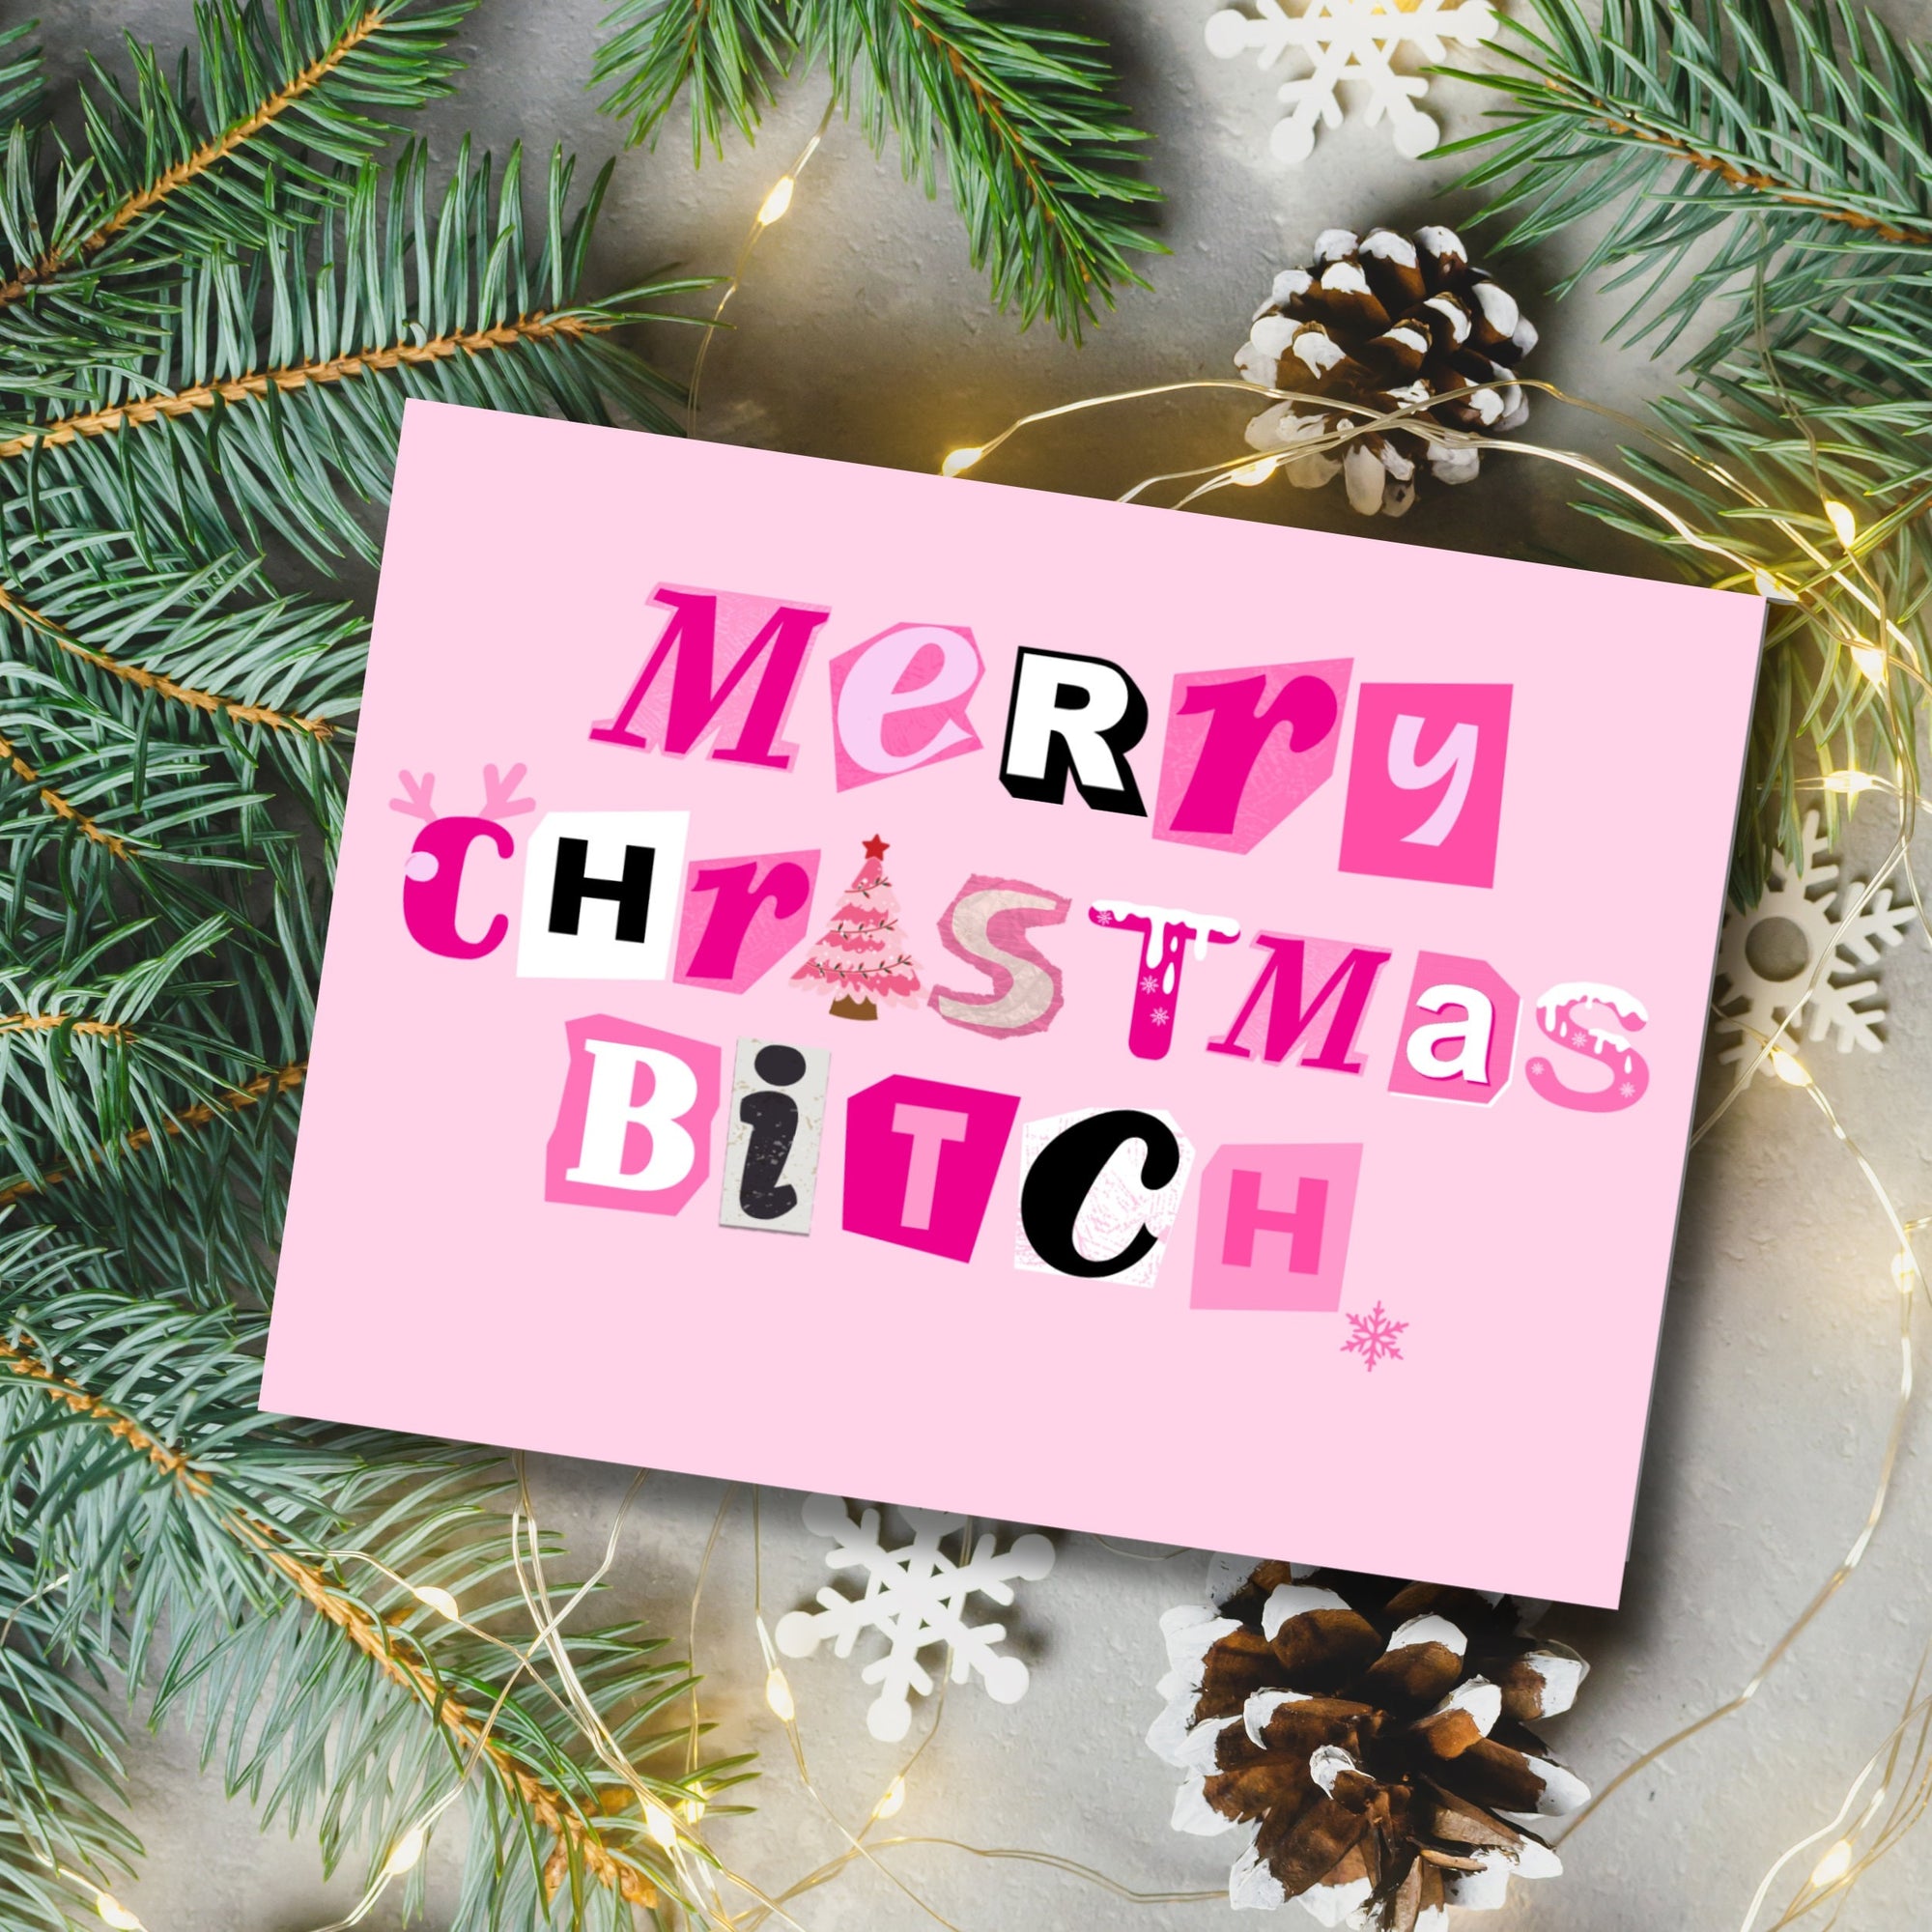 Merry Christmas Bitch Card